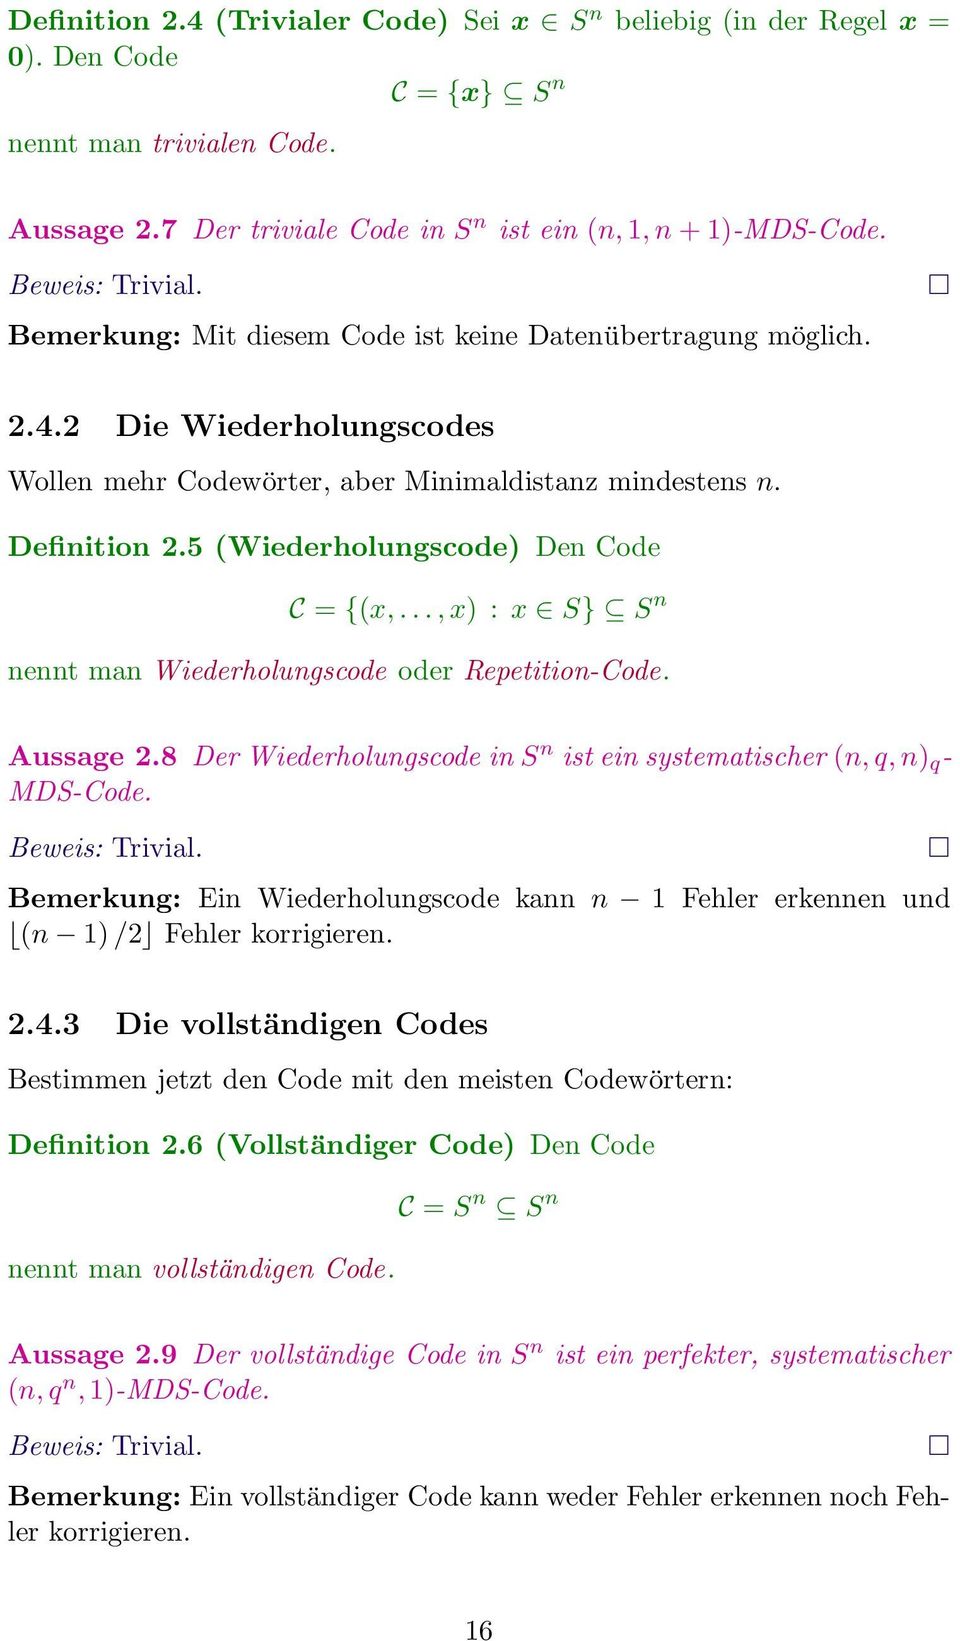 5 (Wiederholungscode) Den Code C = {(x,...,x) : x S} S n nennt man Wiederholungscode oder Repetition-Code. Aussage 2.8 Der Wiederholungscode in S n ist ein systematischer (n,q,n) q - MDS-Code.